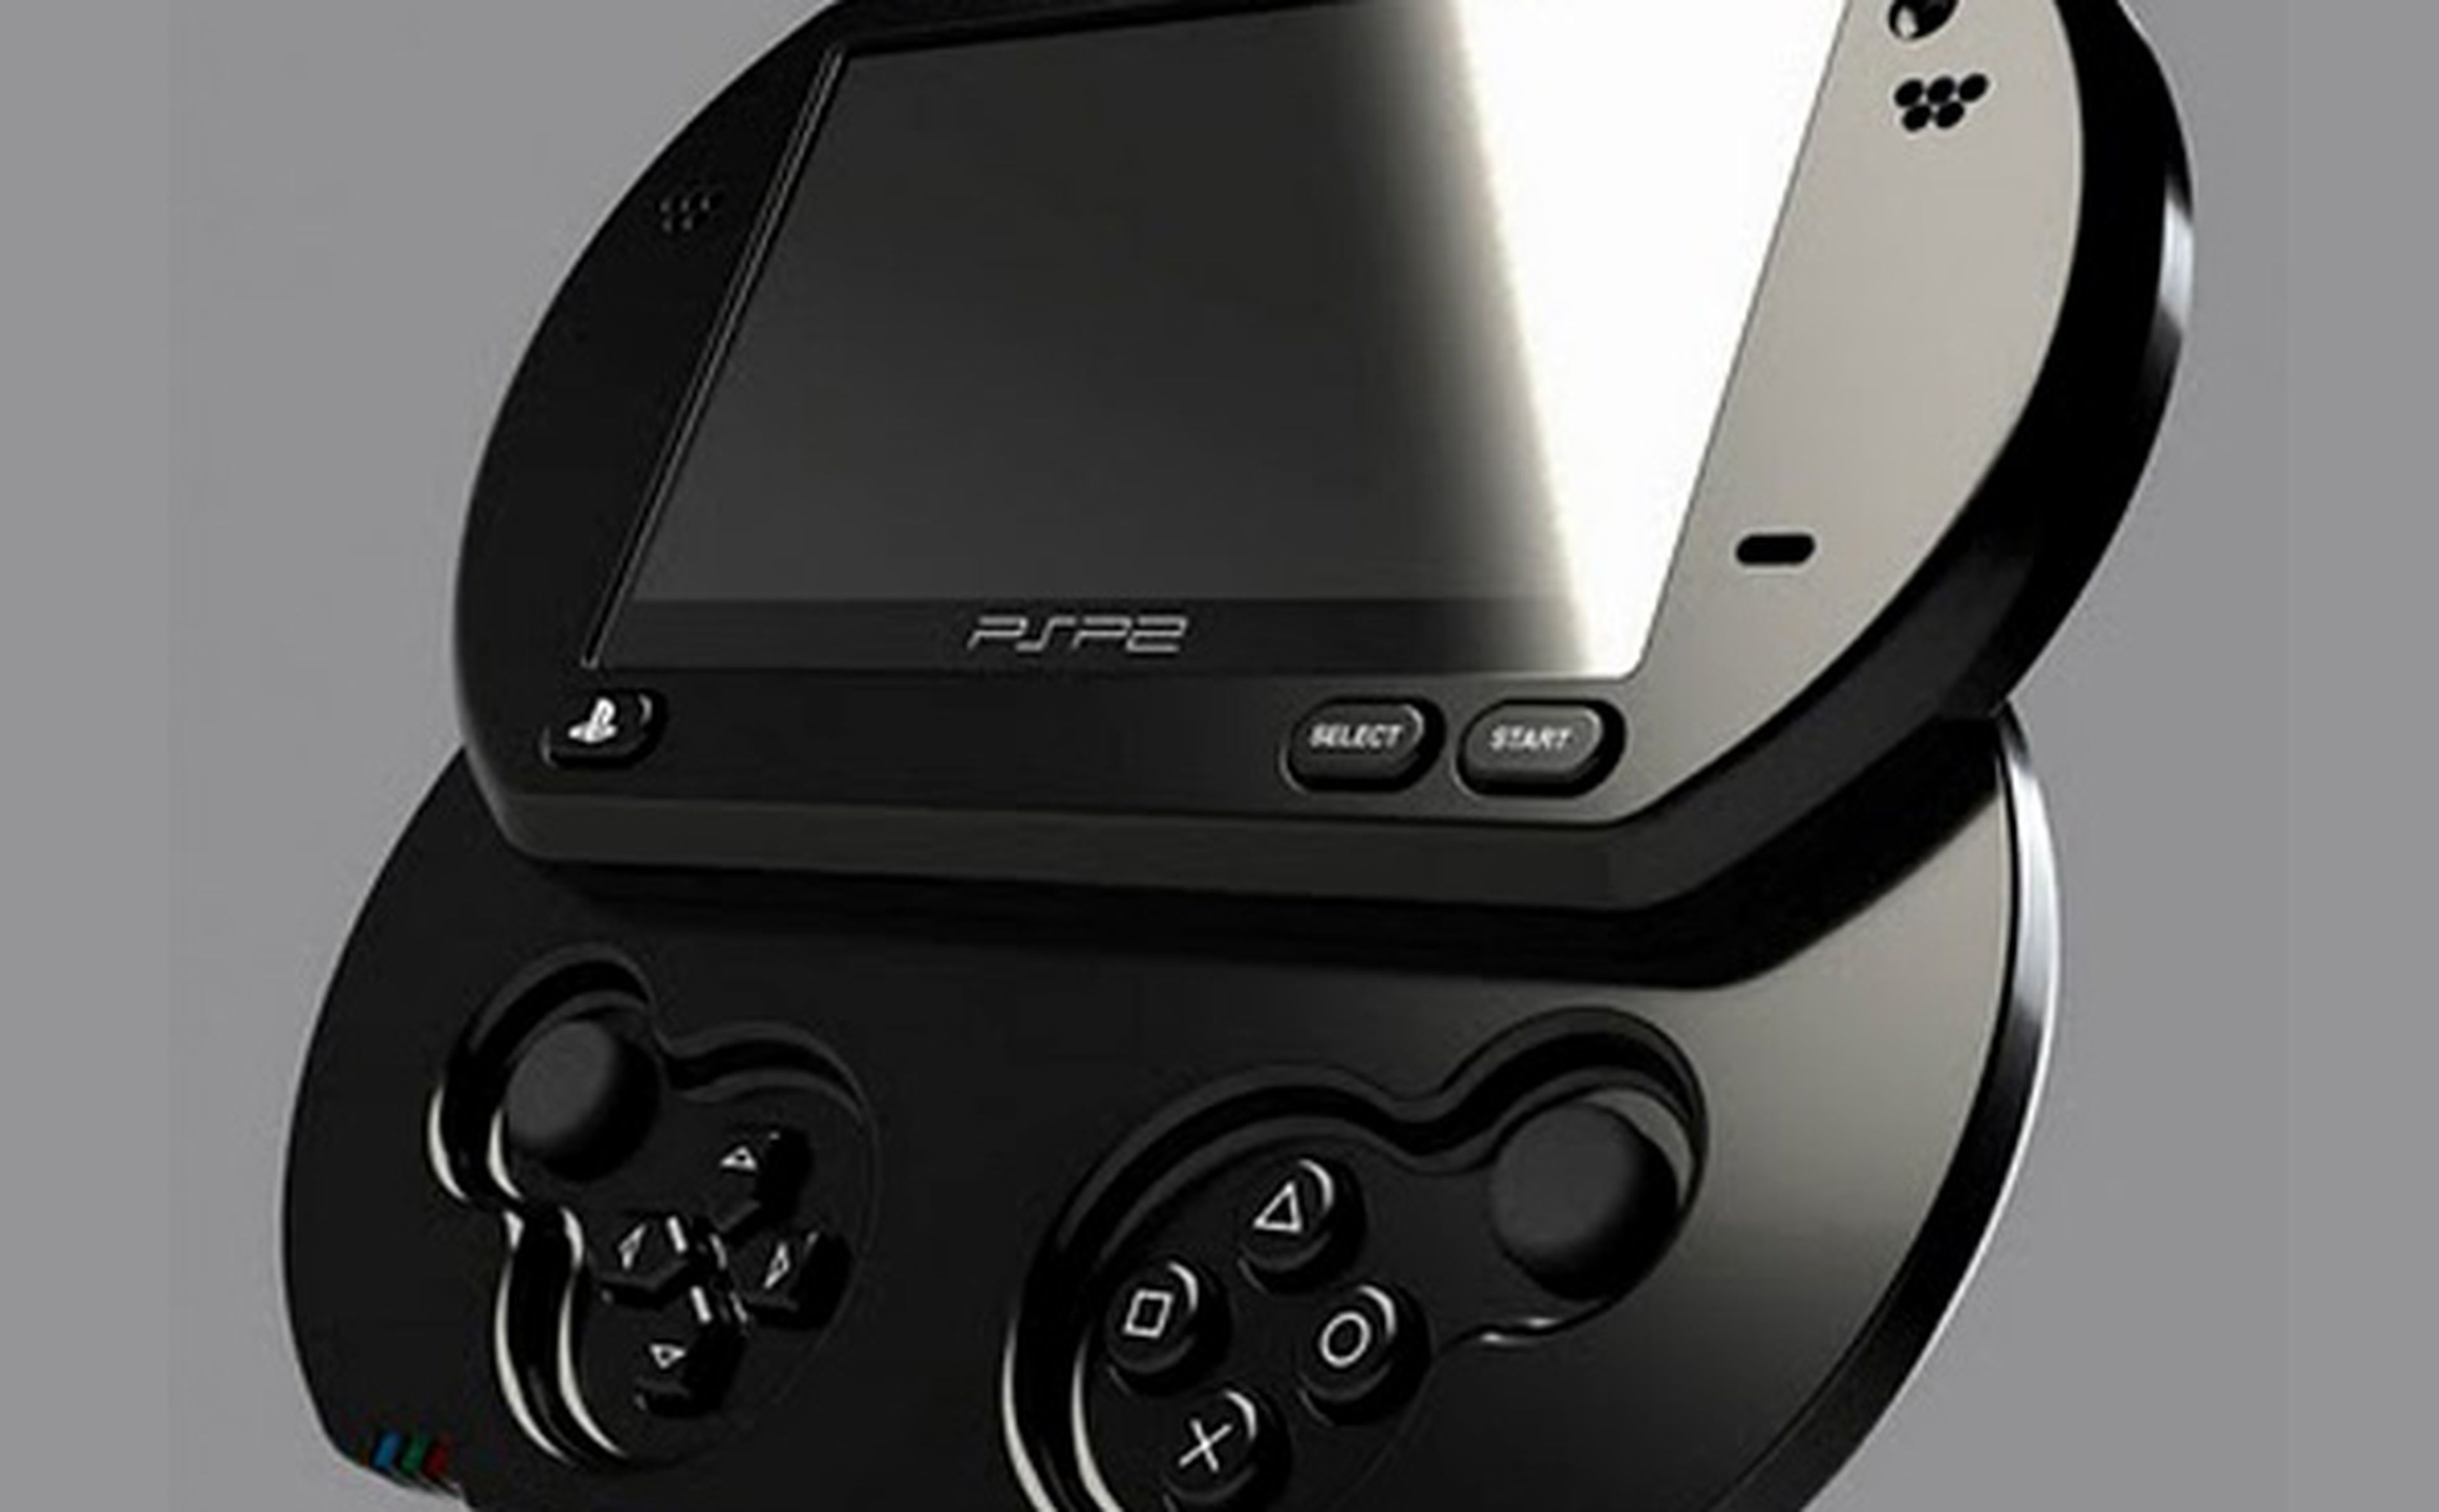 Pantalla OLED y conexión 3G para PSP2